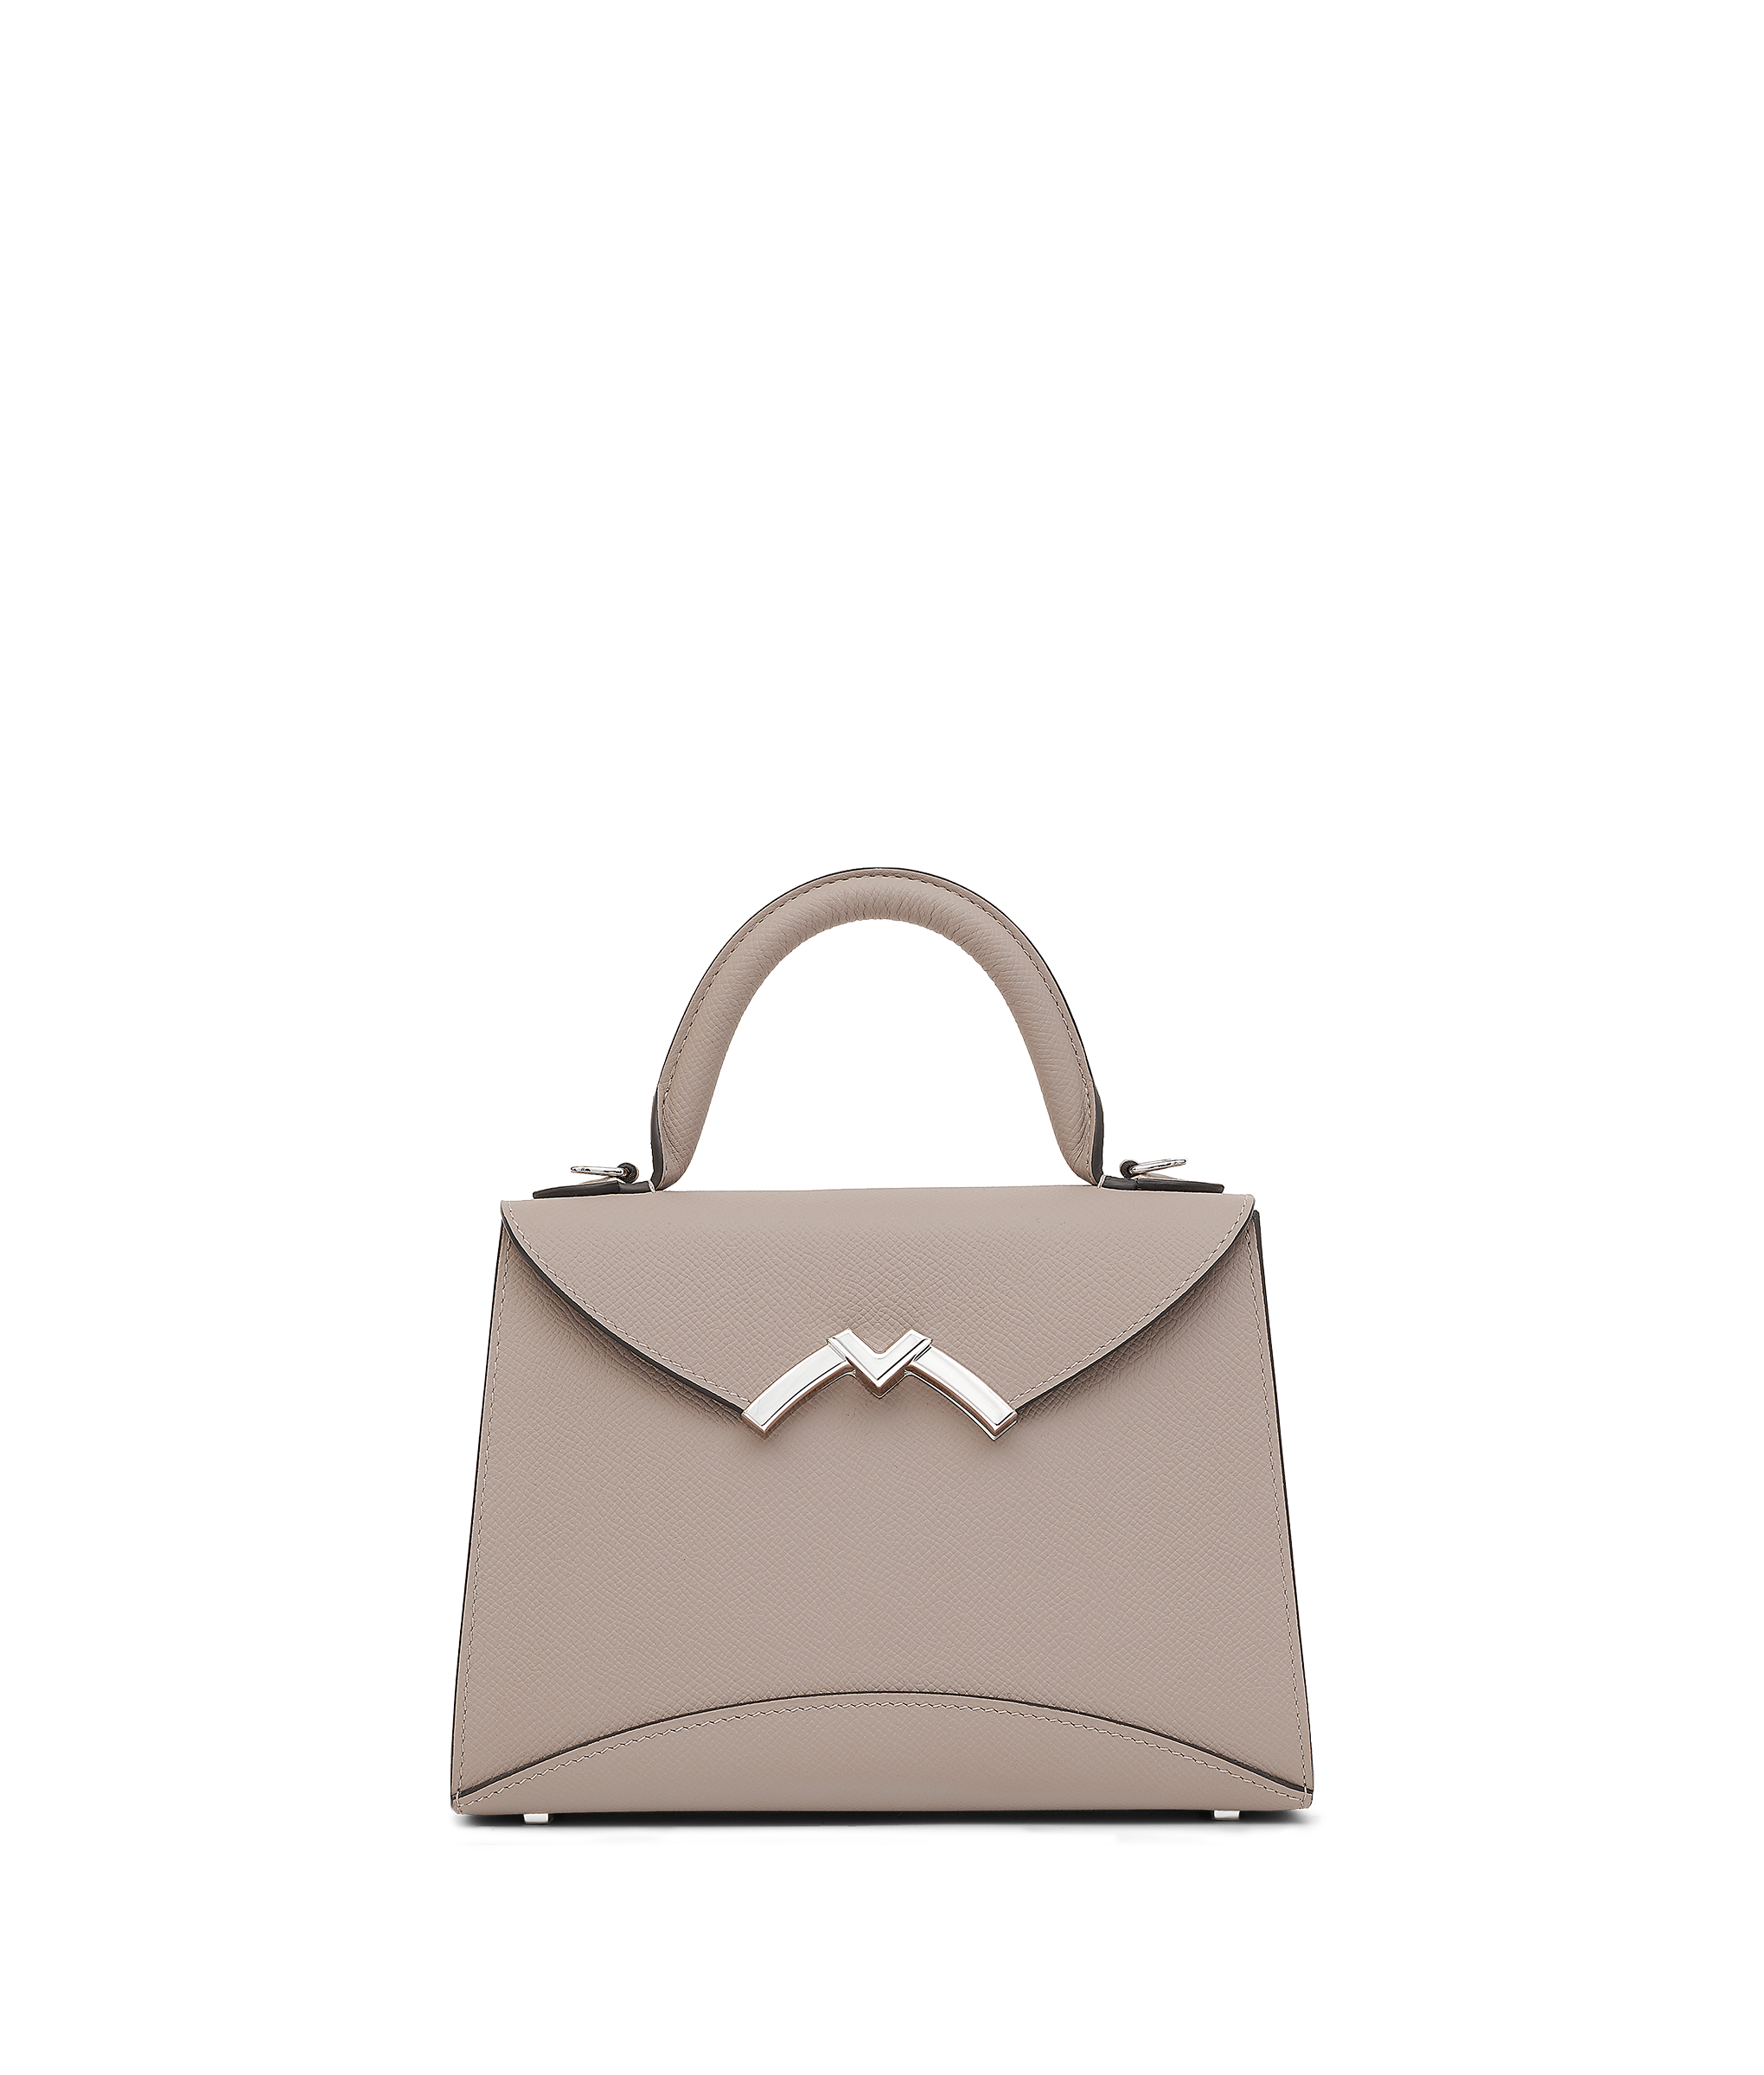 Gabrielle MOYNAT Mini Bag In Carat Calfskin